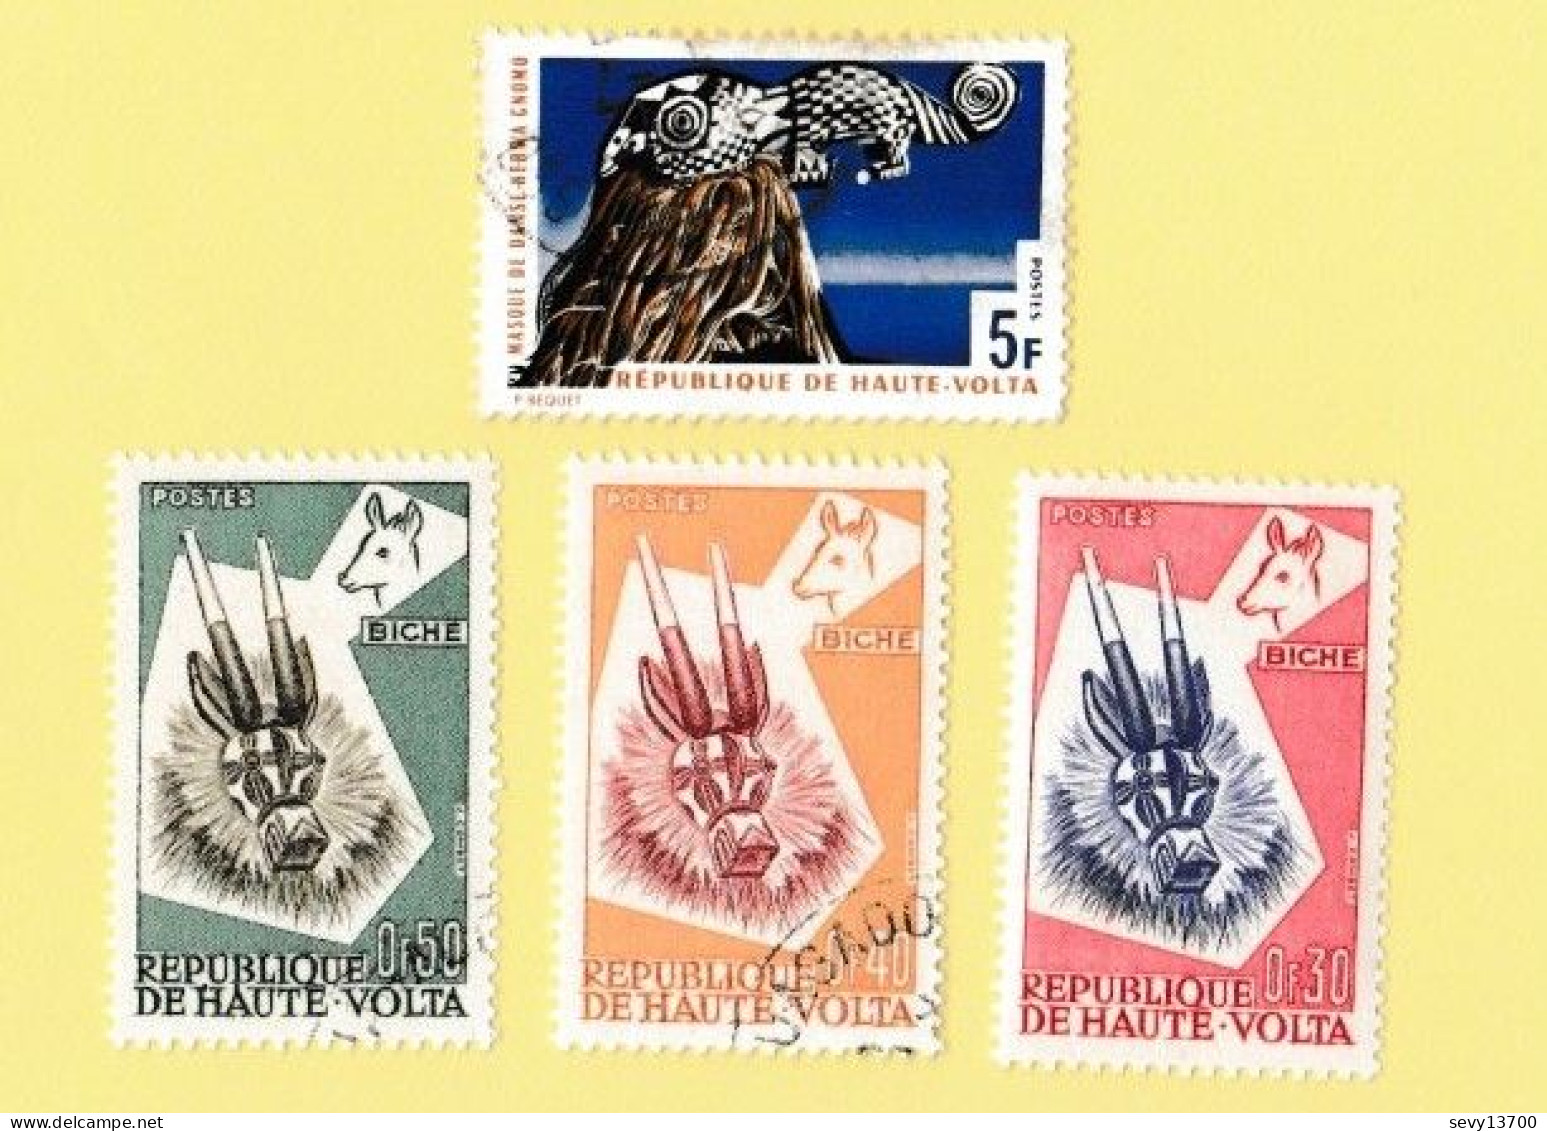 Haute Volta 25 timbres - Mosquée, Cathédrale, Eglise, bateau, Roi Baudouin, Youri Gagarine folklore, masques, animaux